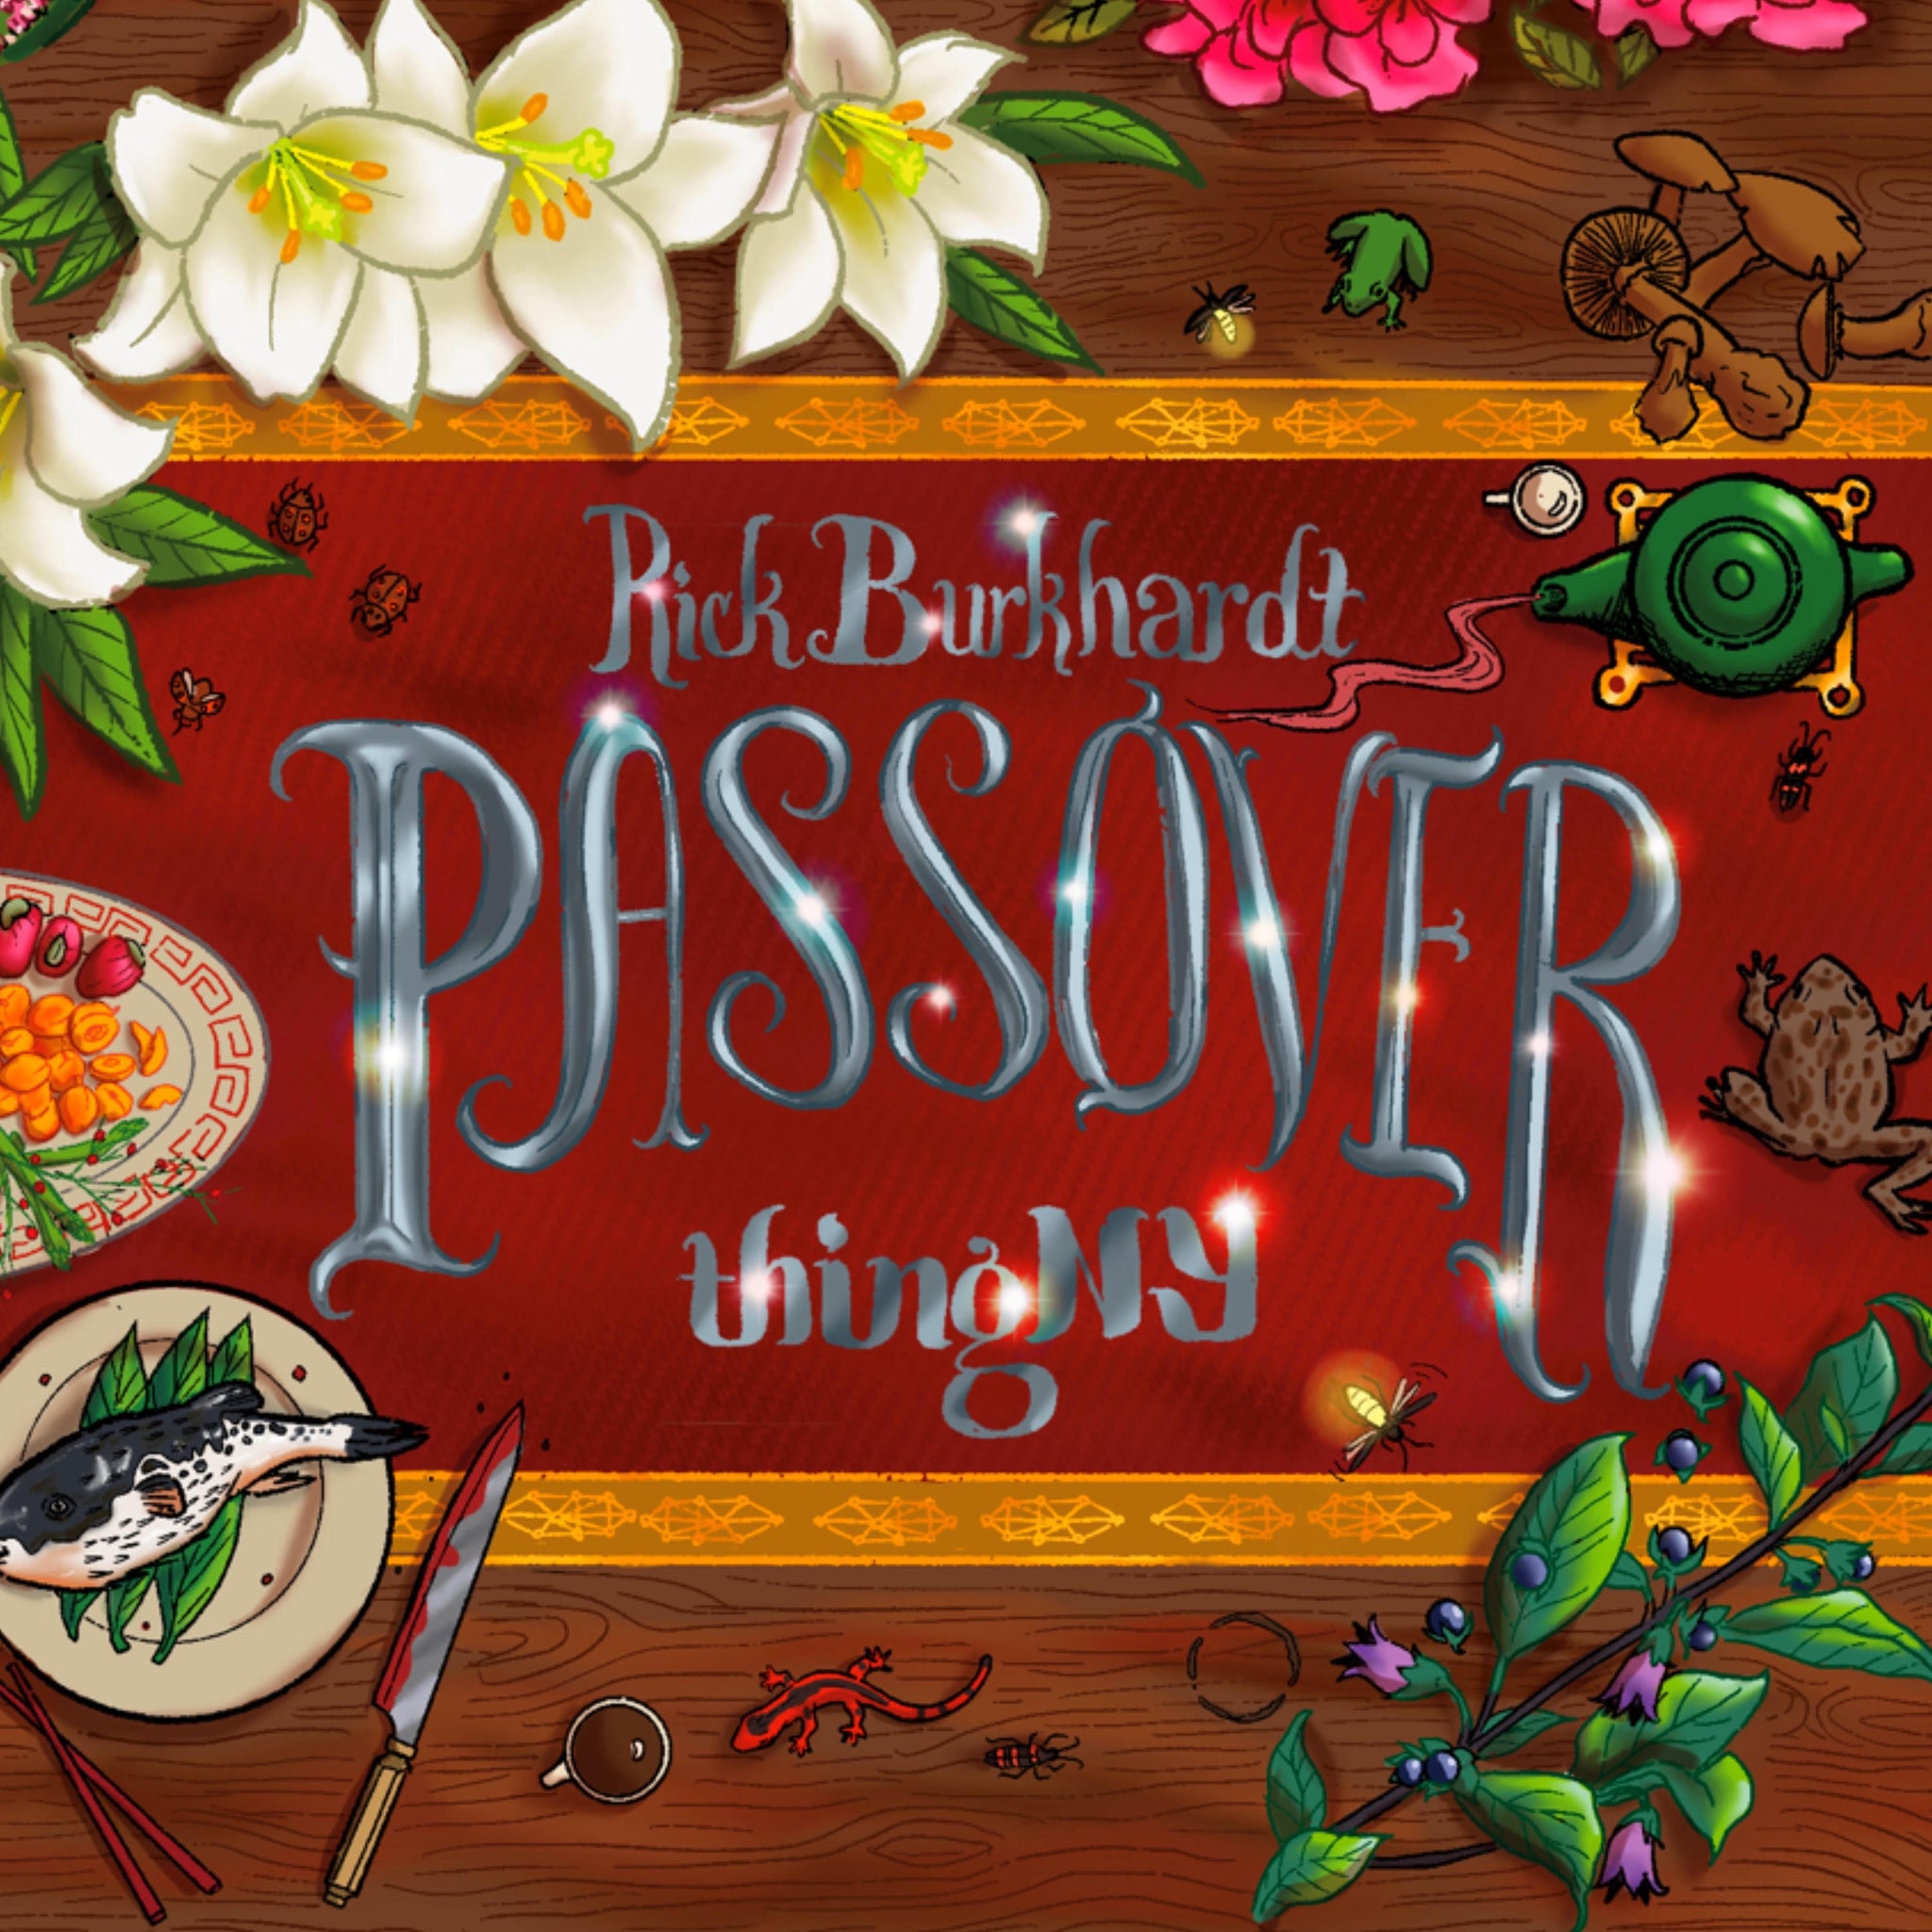 Burkhardt: Passover / thingNY